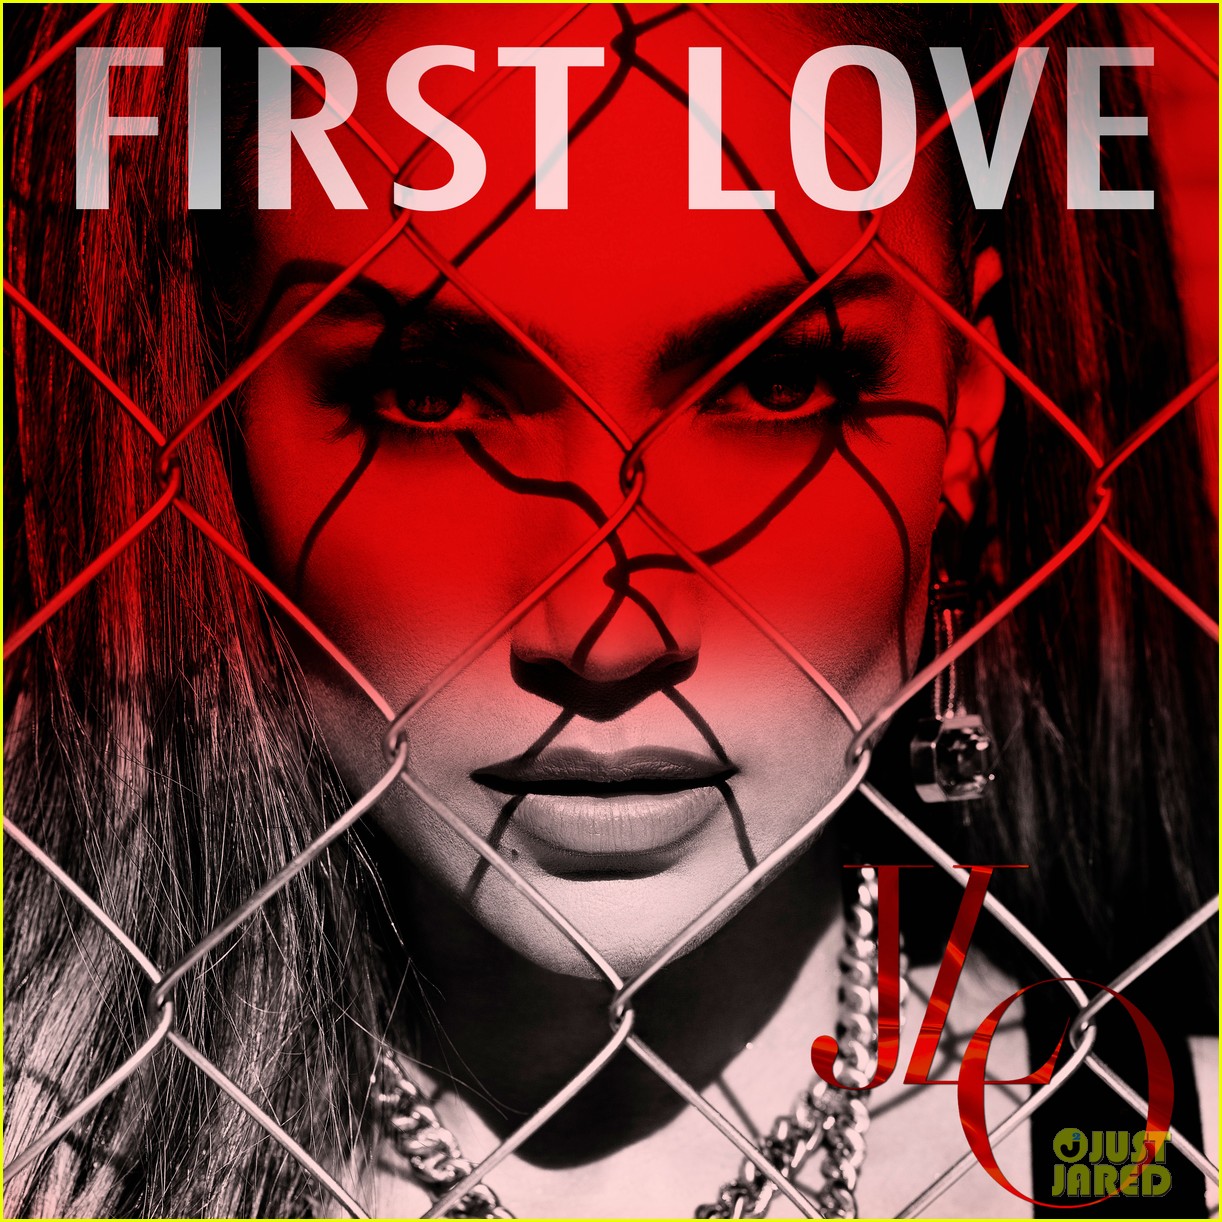 jennifer lopez first love single artwork